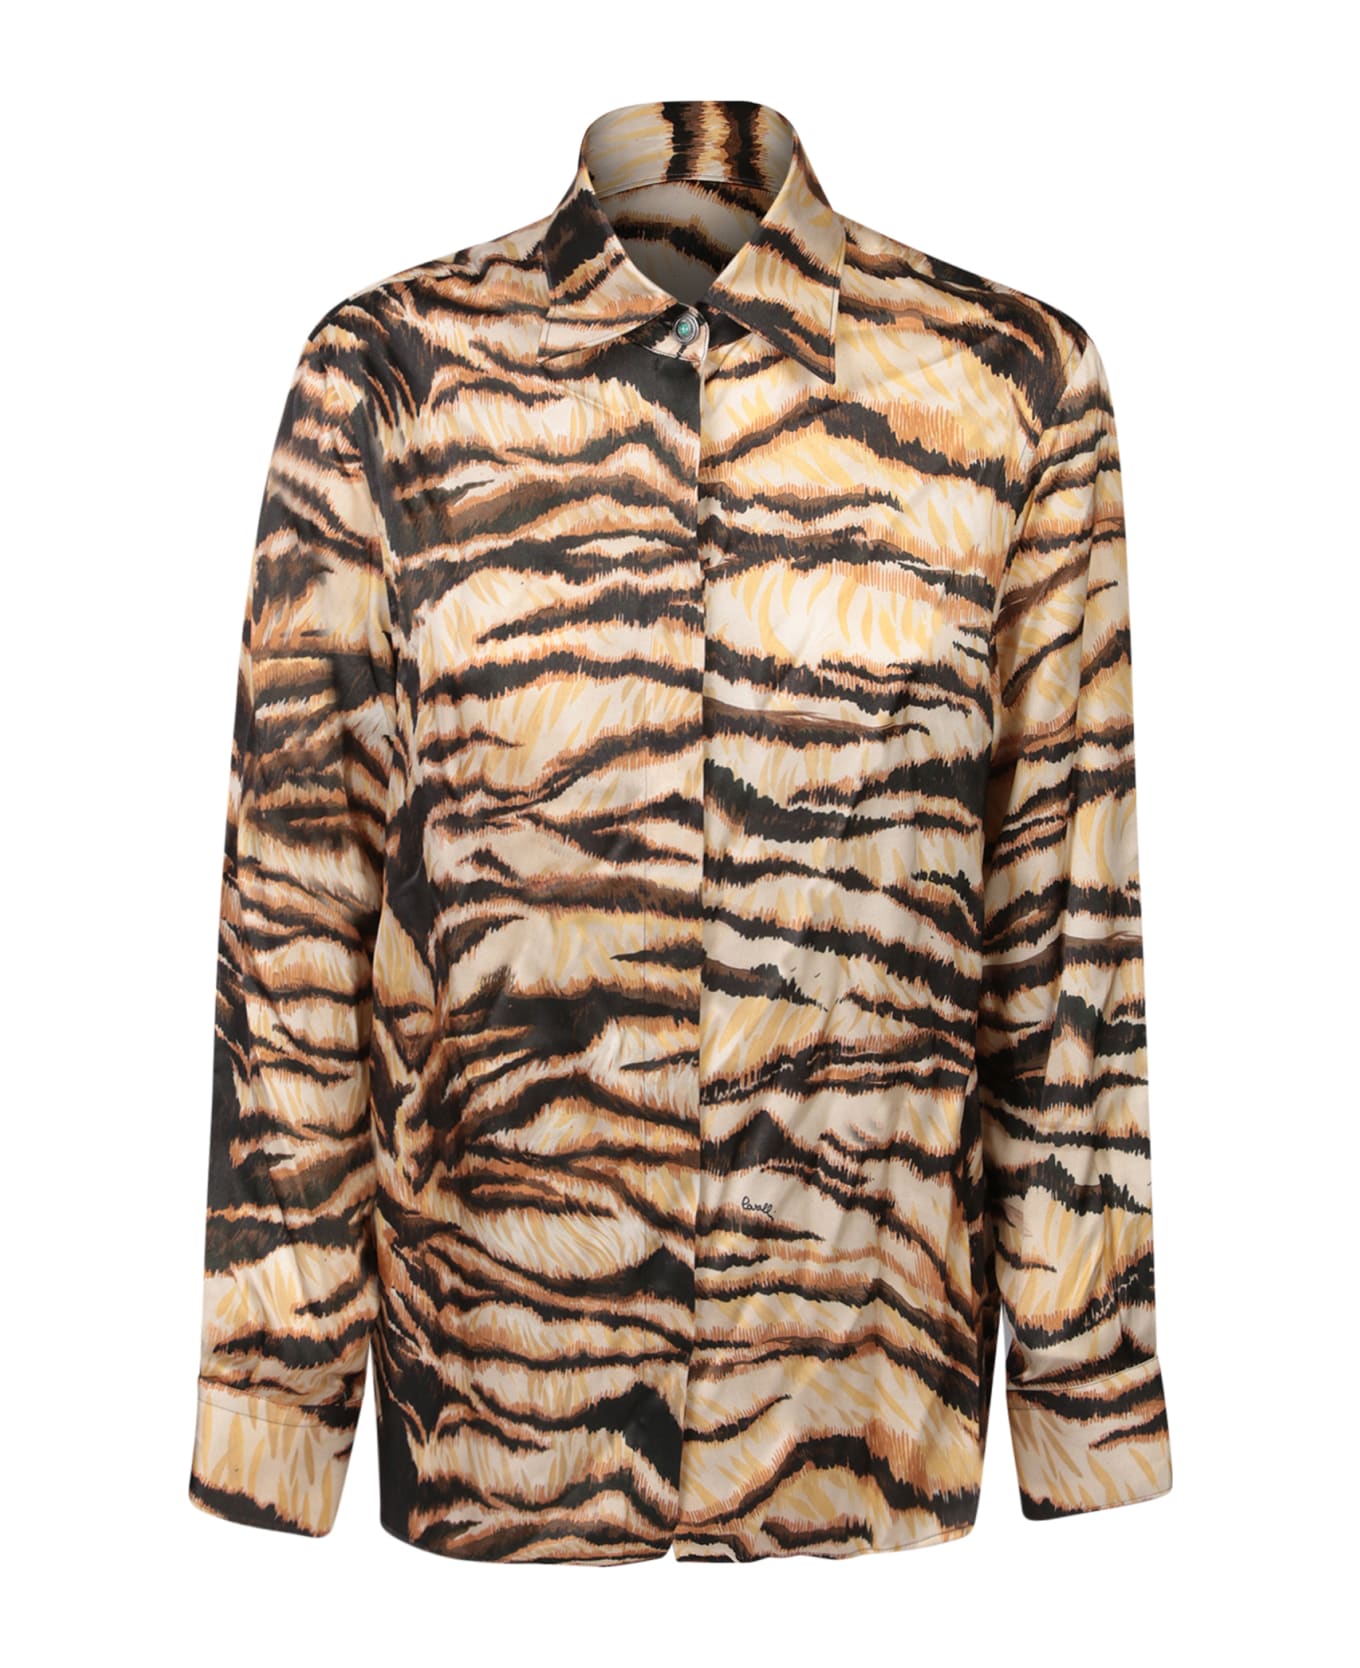 Roberto Cavalli Tiger Print Shirt - Multi